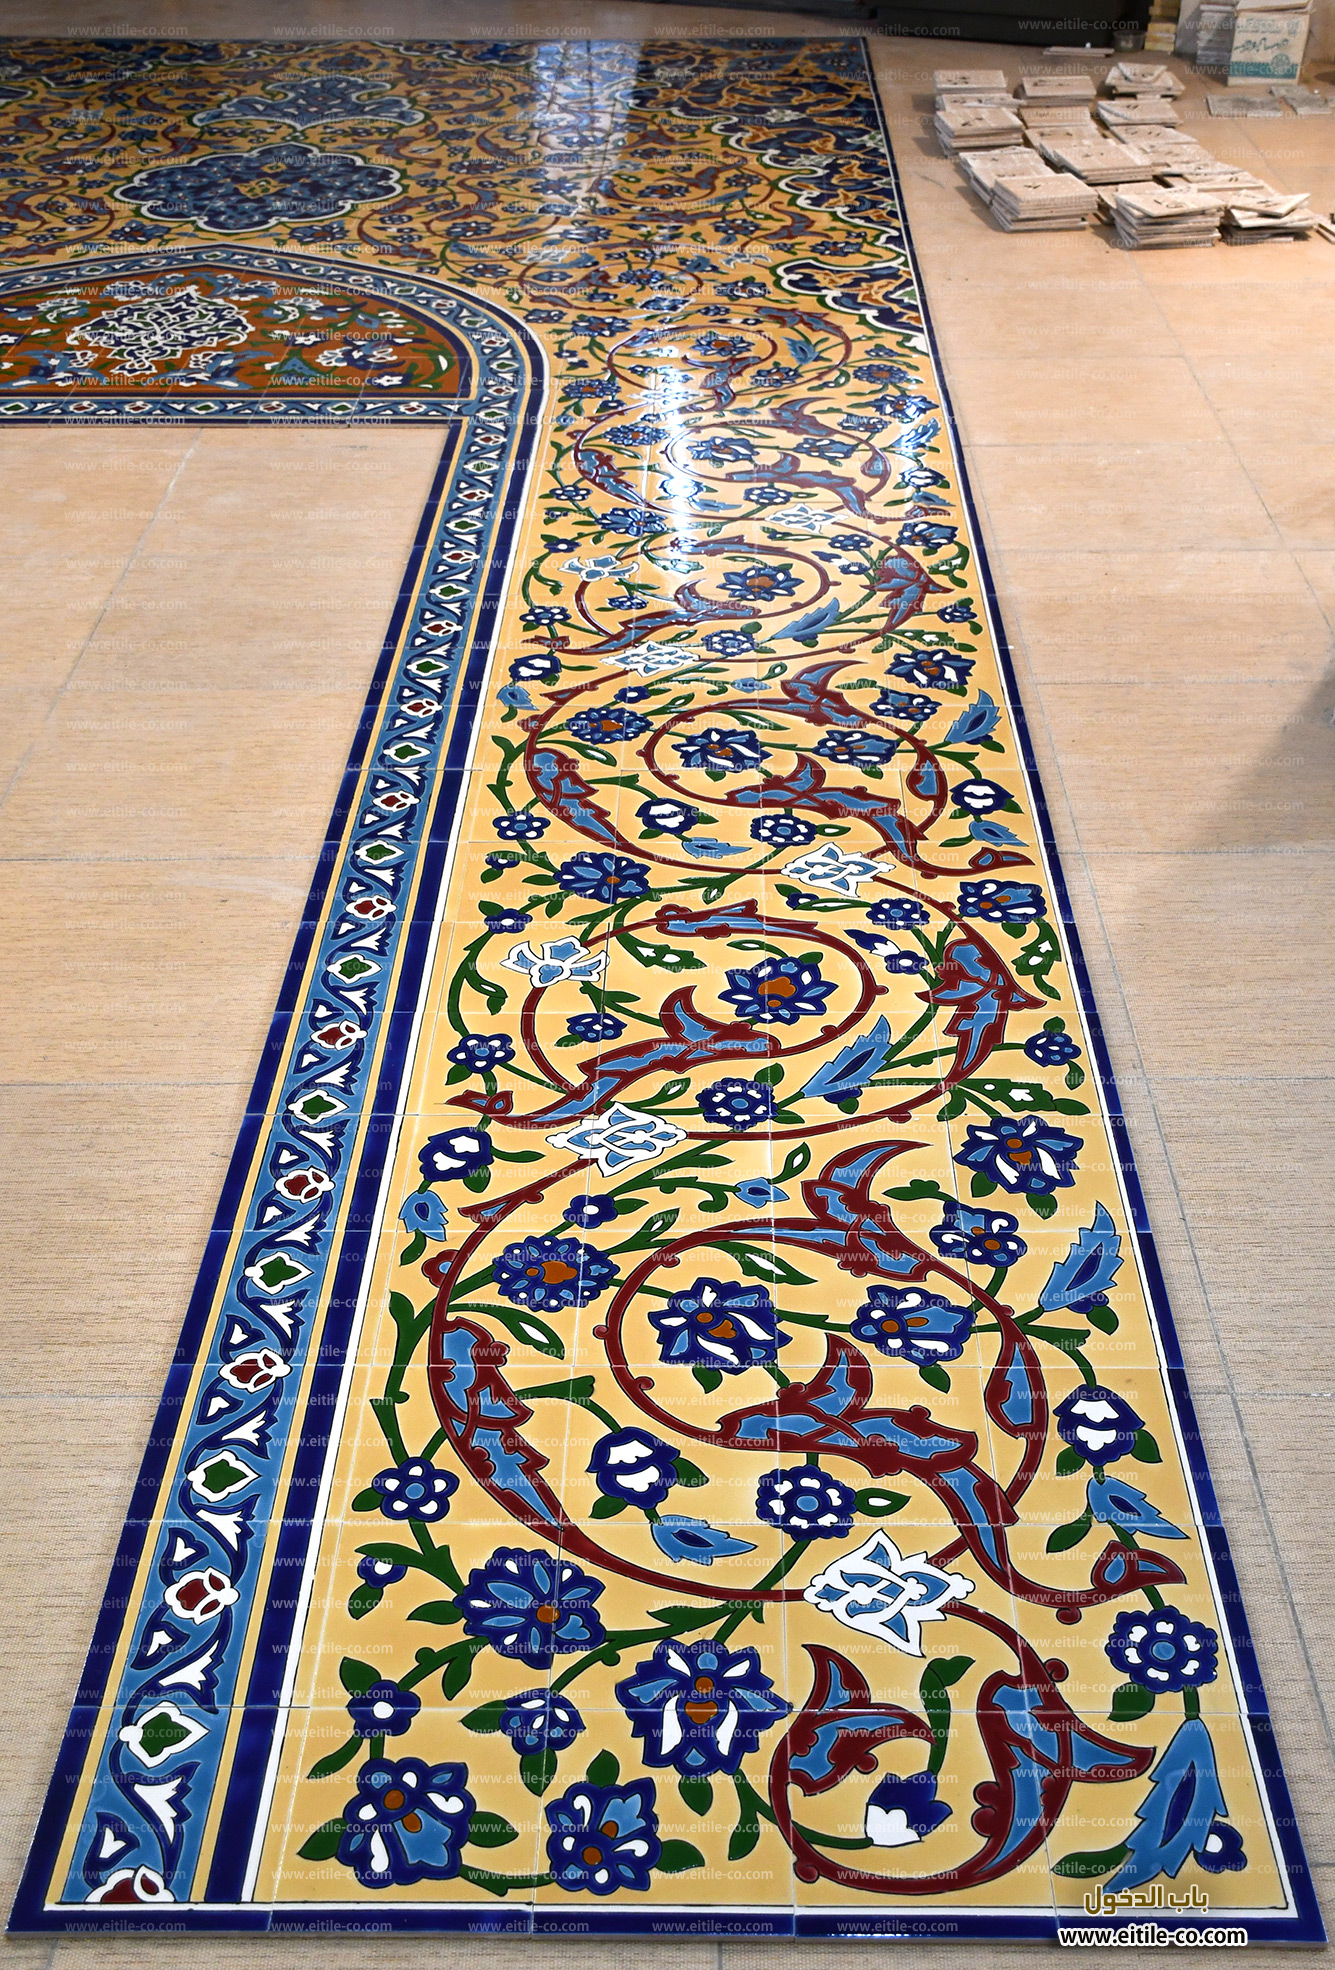 Supplier of handmade tiles for entrance door, www.eitile-co.com